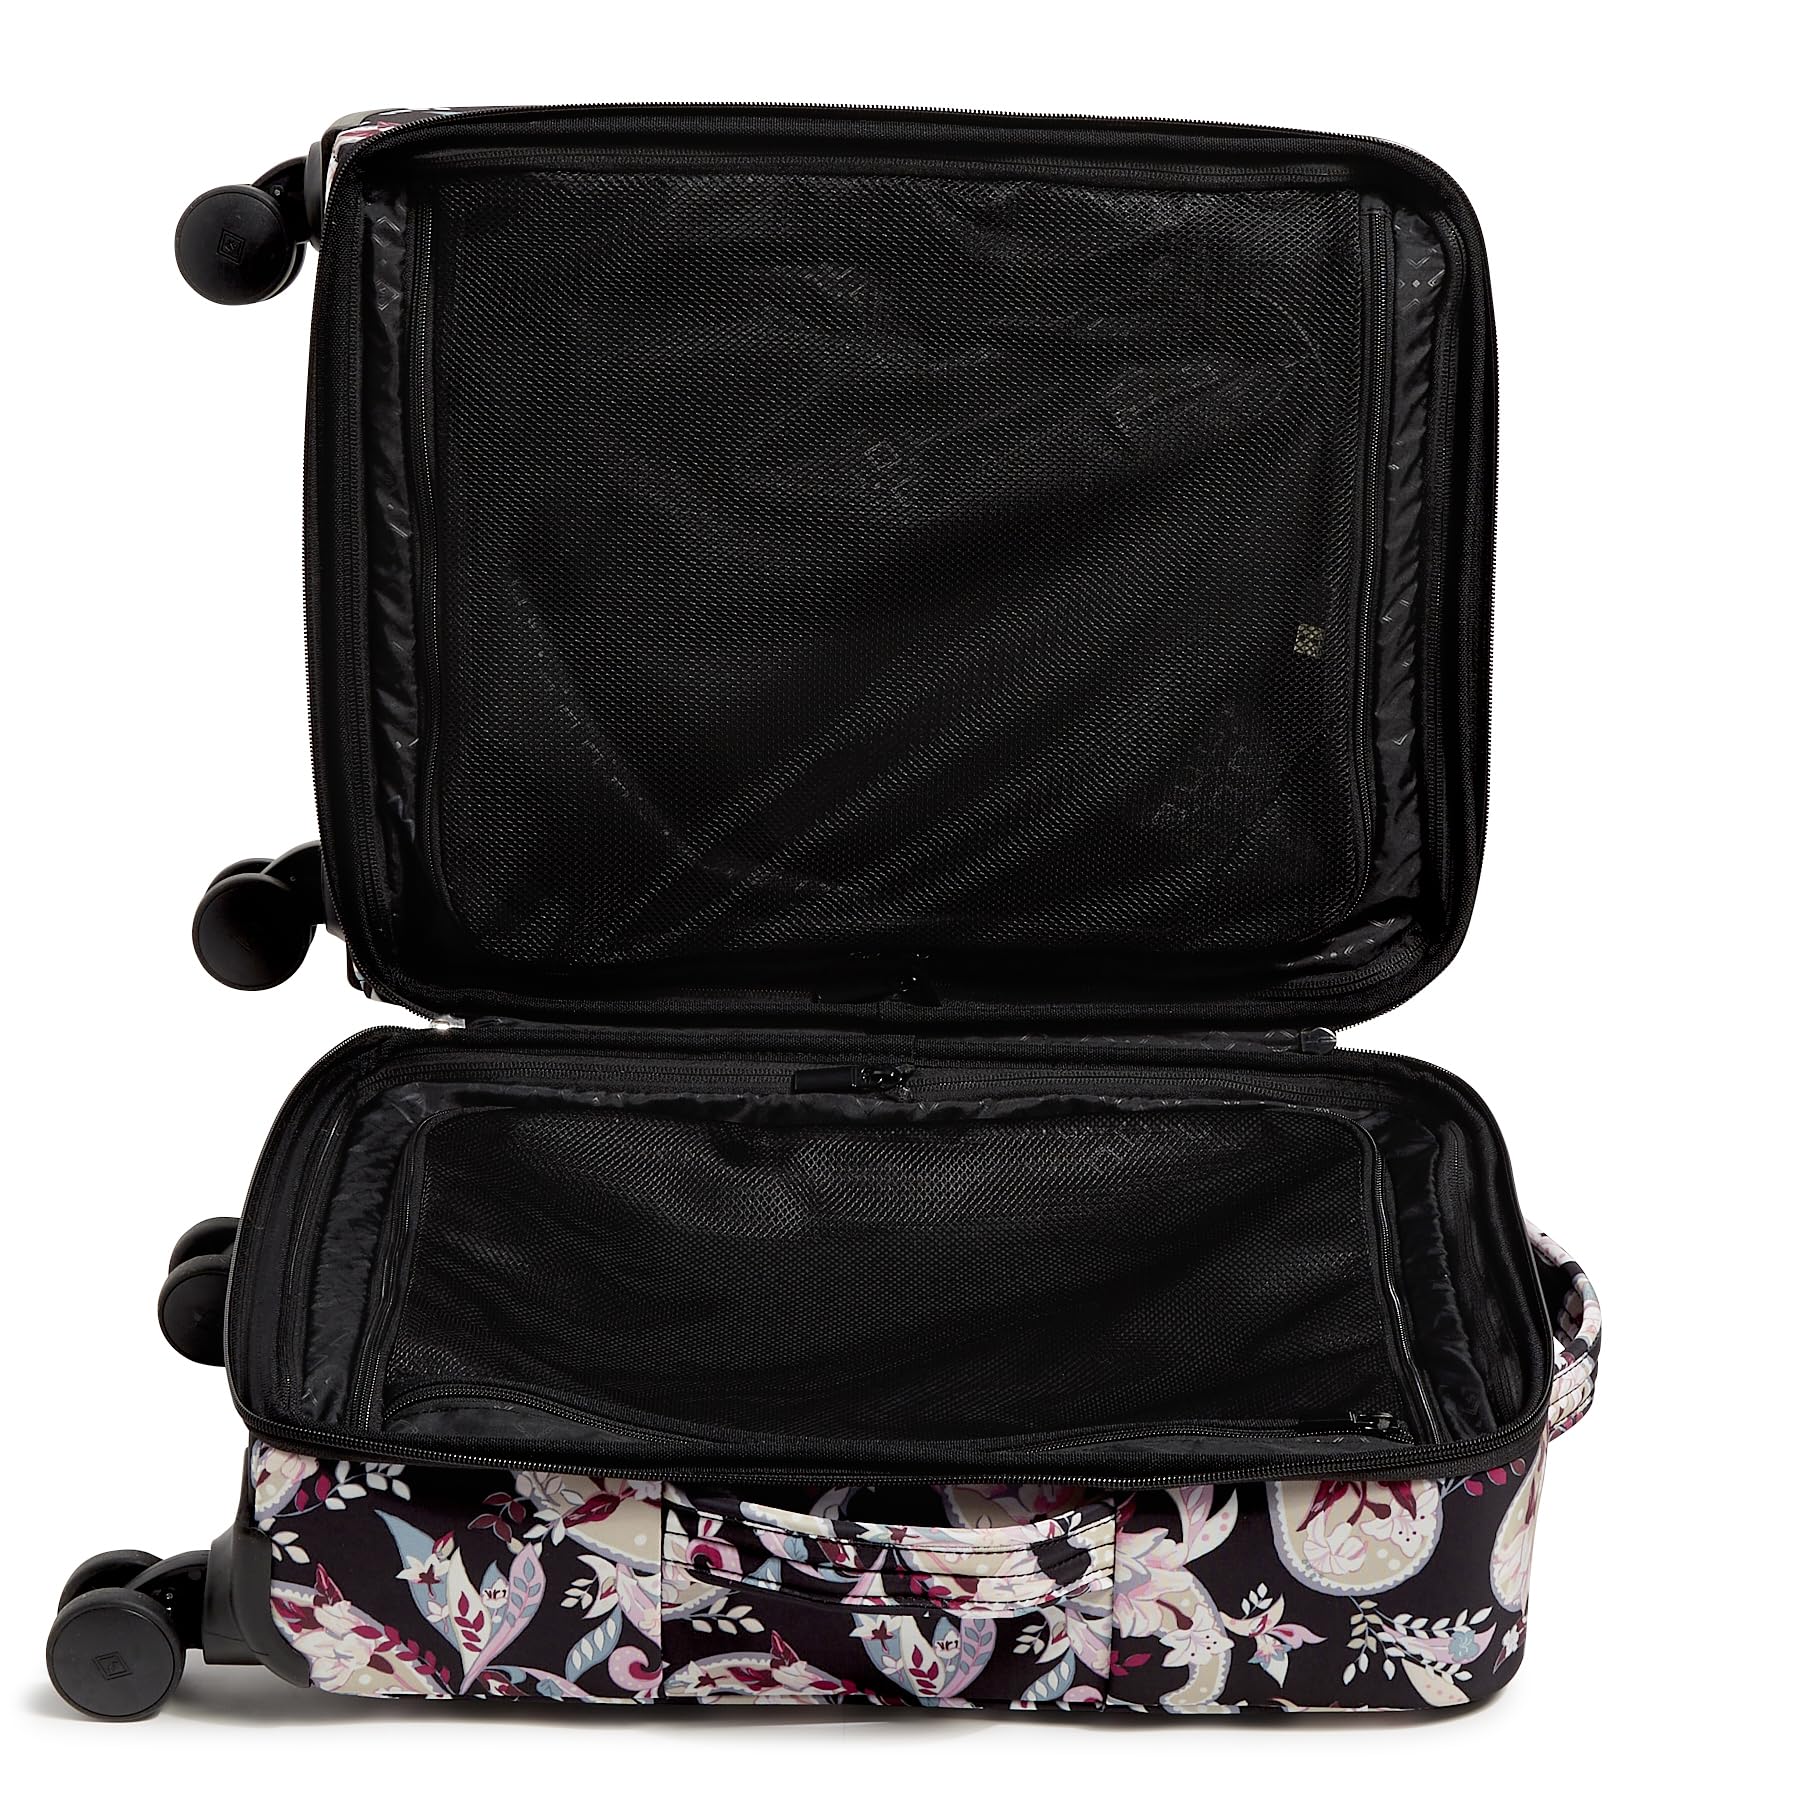 Vera Bradley Women's Softside Rolling Suitcase Luggage